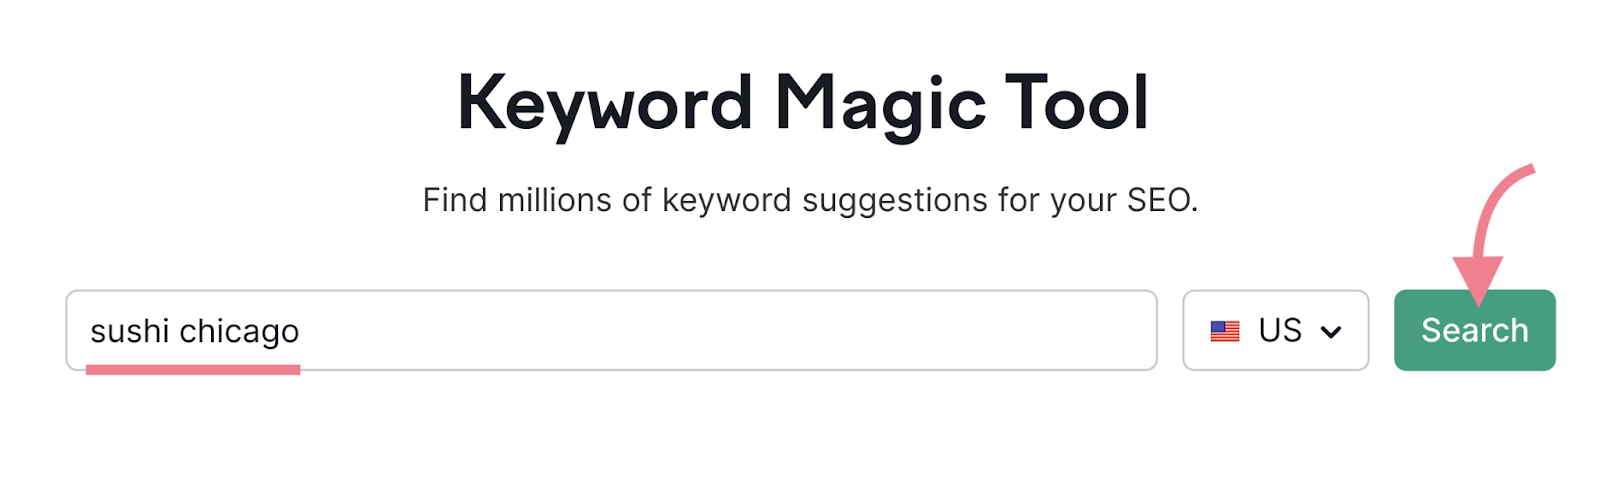 Keyword Magic Tool sushi chicago search